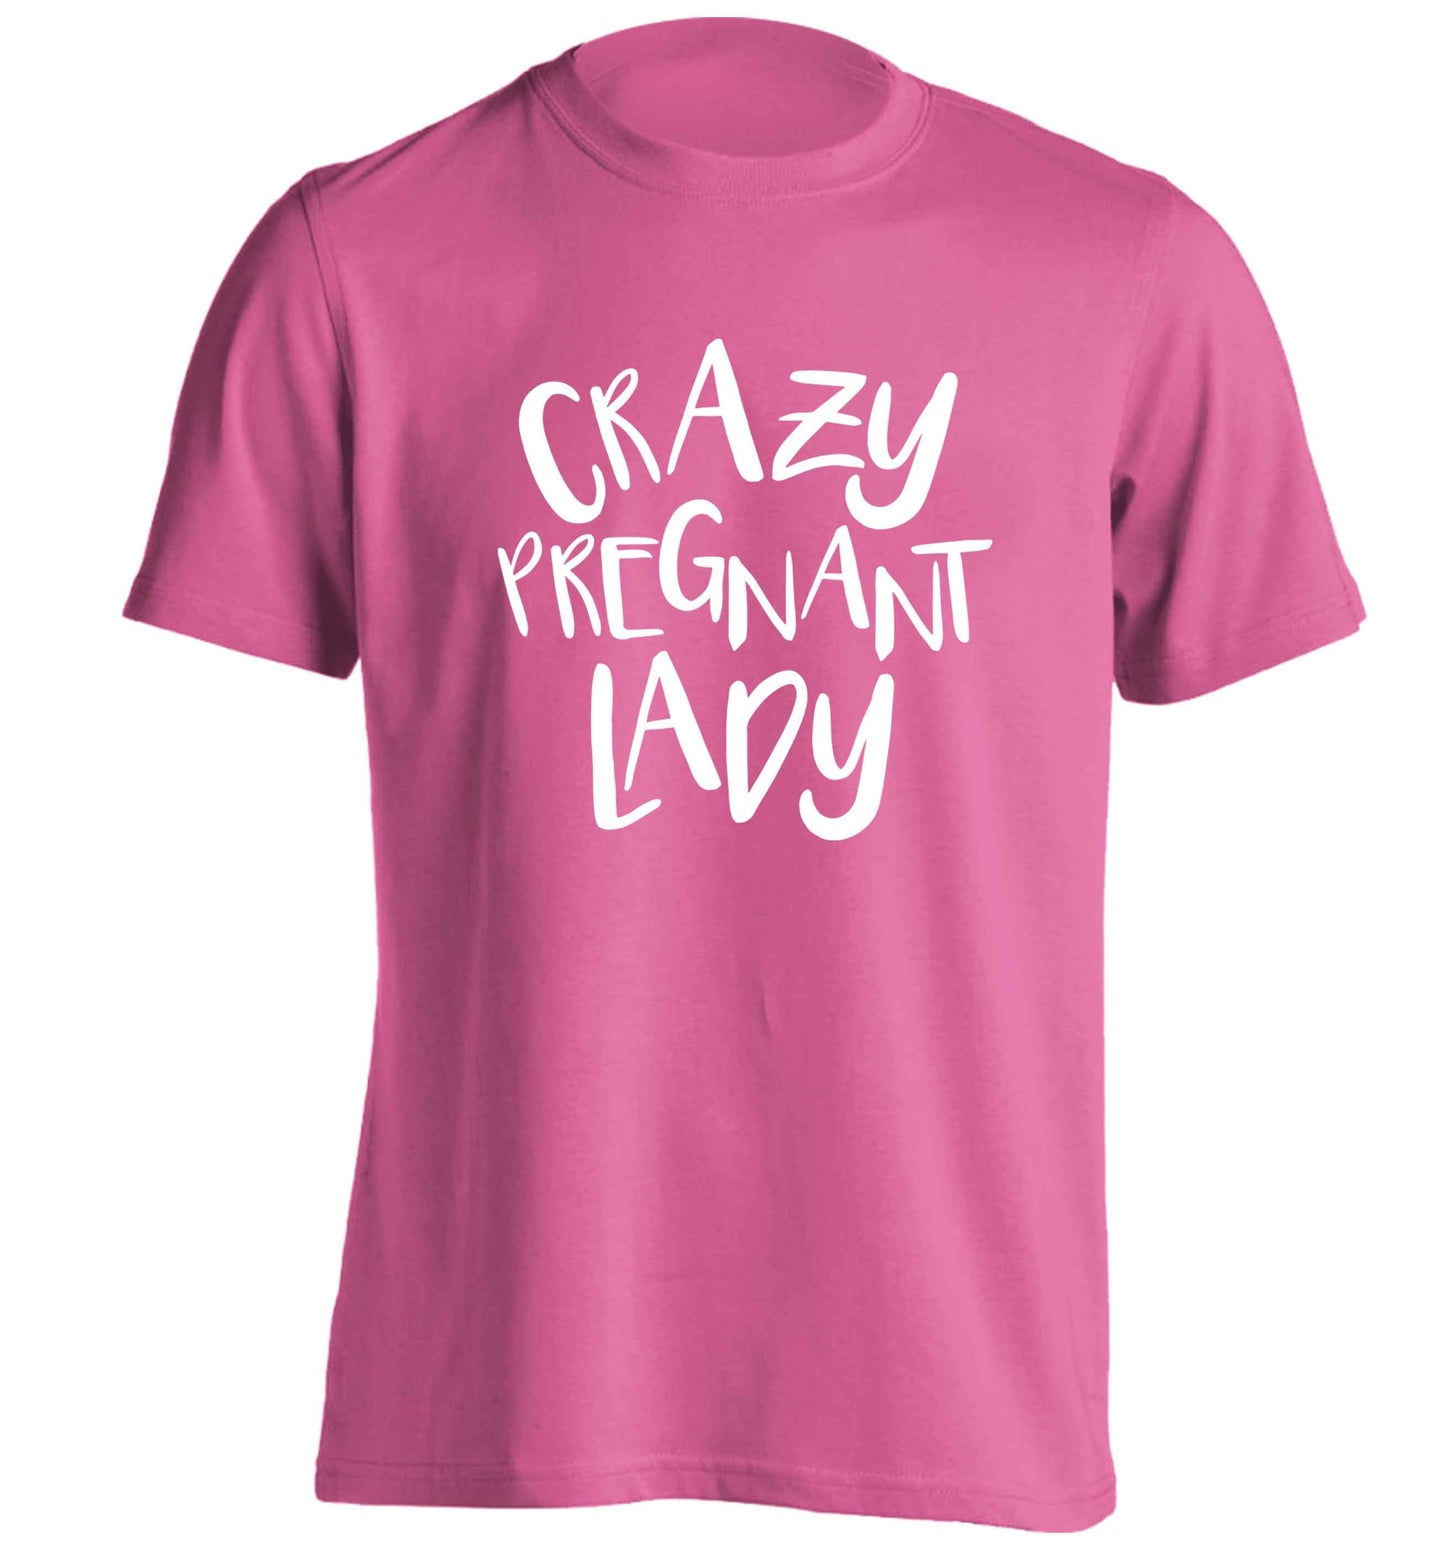 Crazy pregnant lady adults unisex pink Tshirt 2XL